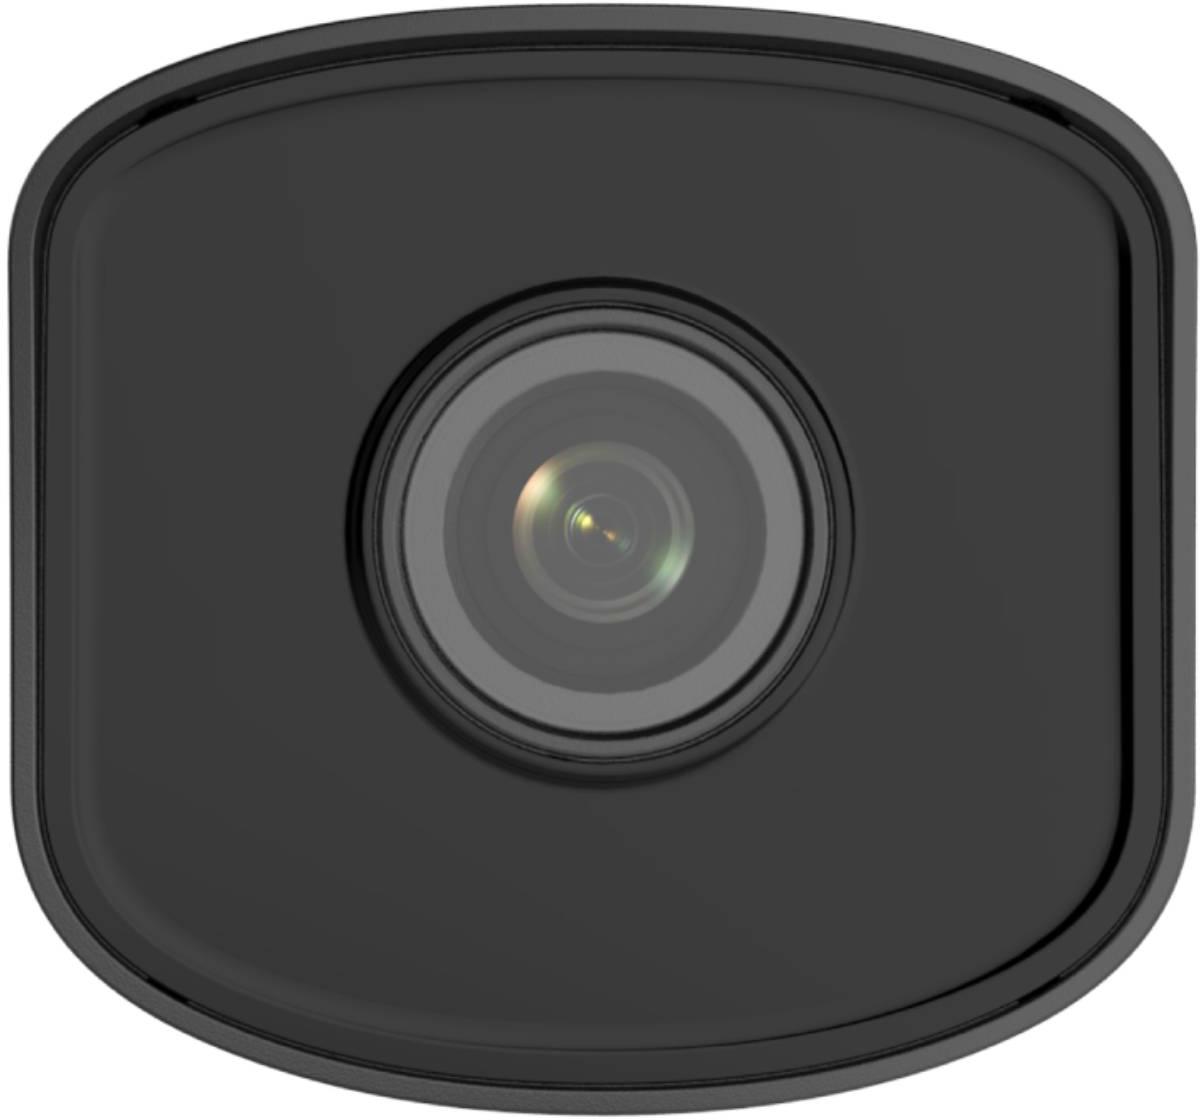 Kamera IP Hilook bullet 2MP IPCAM-B2 - wysoka jakość obrazu